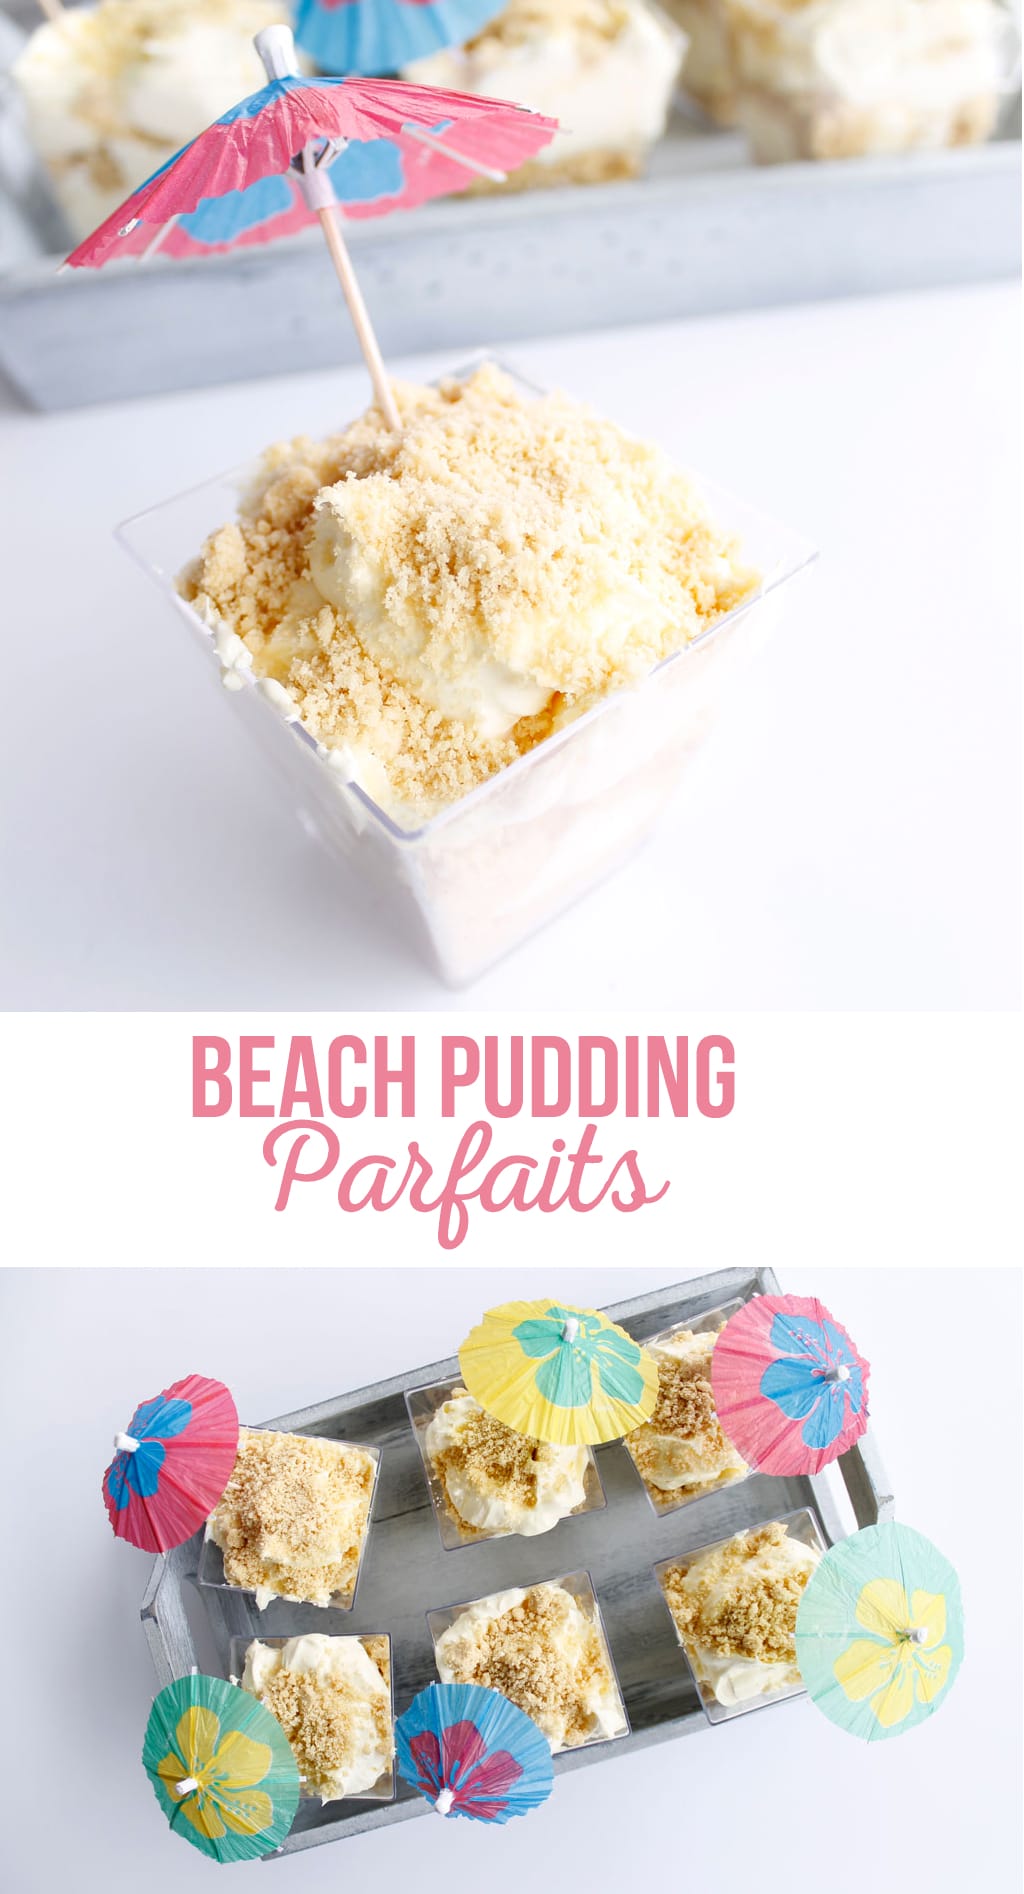 Beach Pudding Parfaits